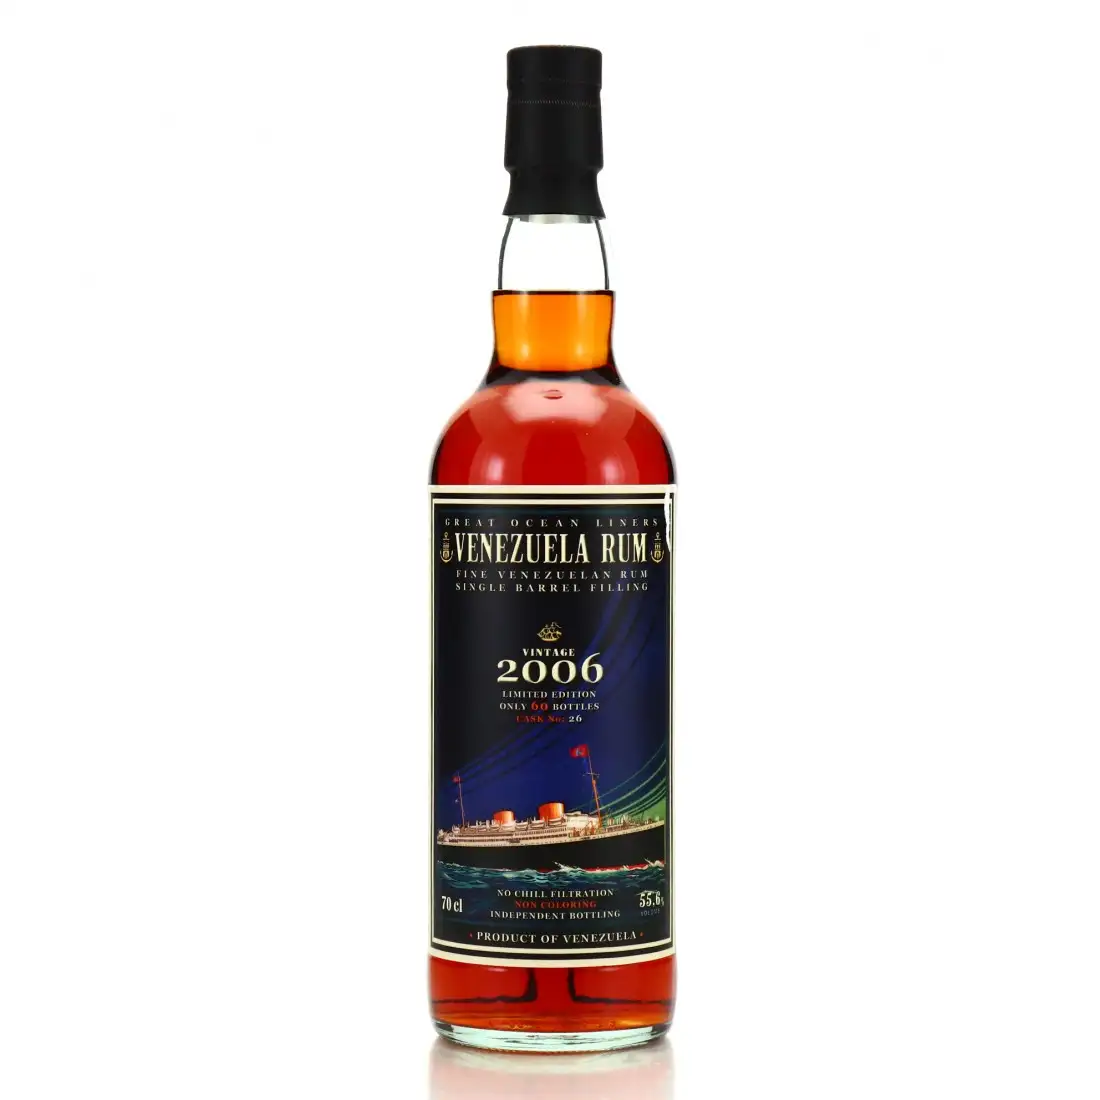 Image of the front of the bottle of the rum Venezuela Rum (Great Ocean Liners)